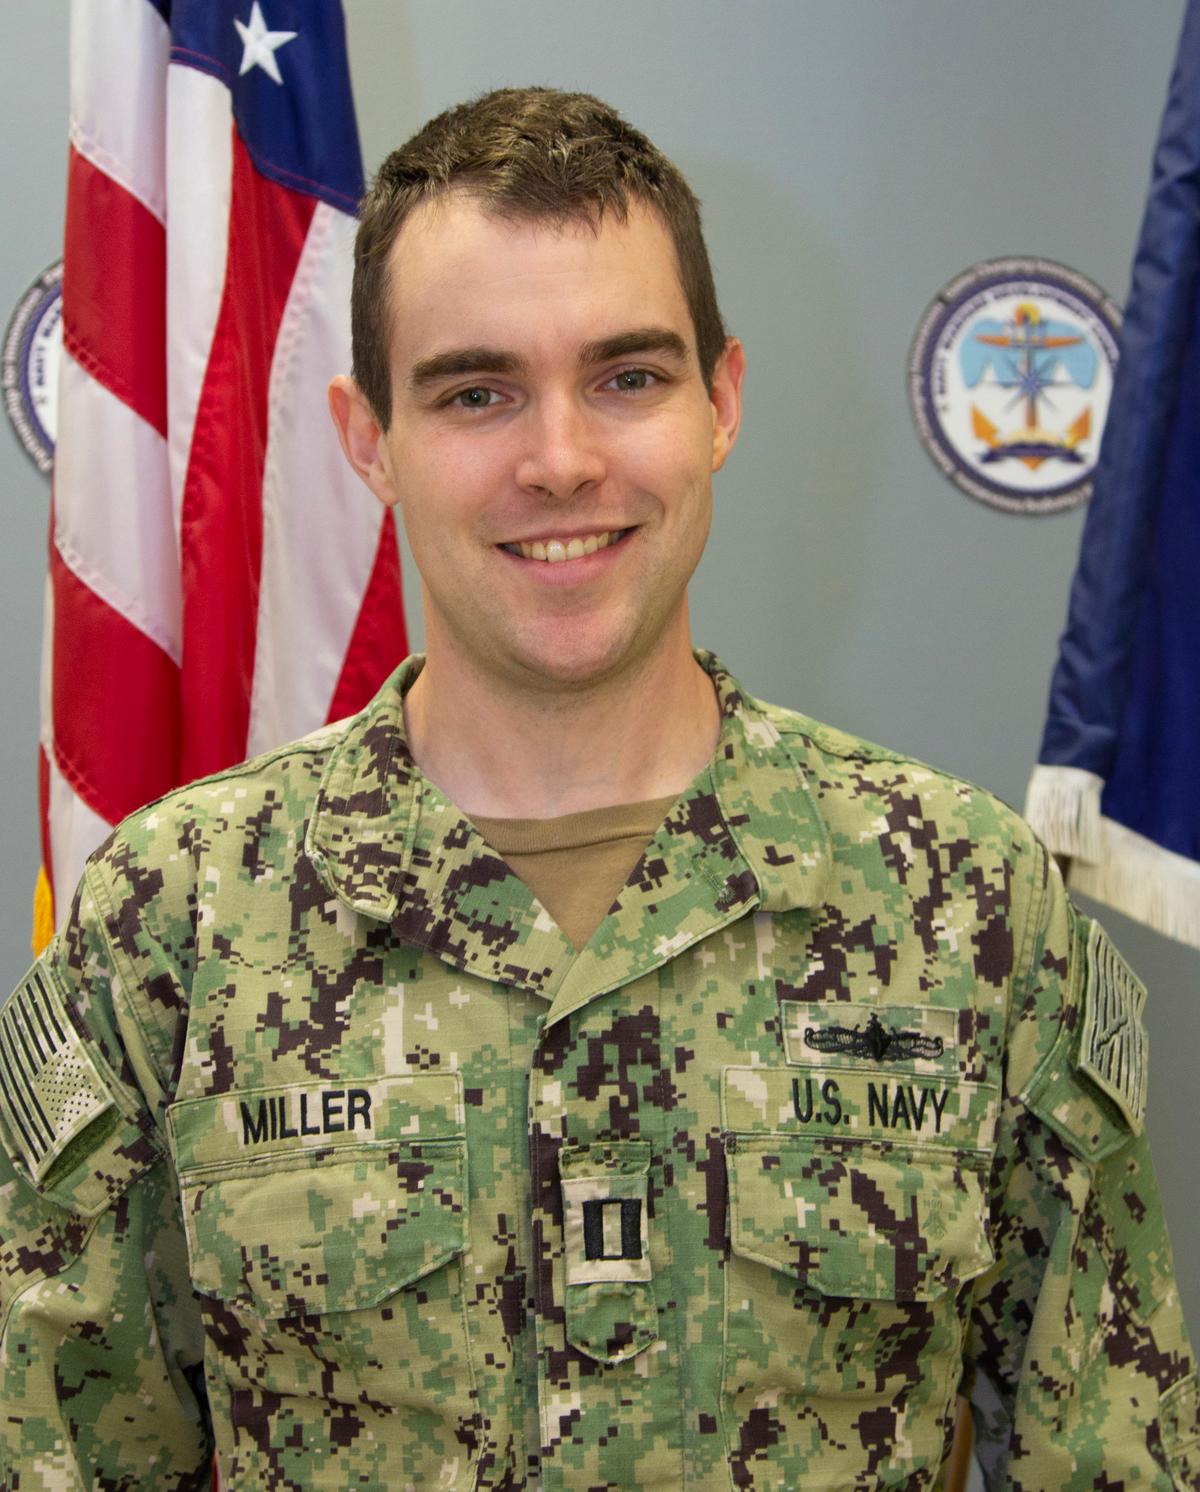 Lt. Miller with Navy Warfare Development Command, Naval Station Norfolk (Ian Delossantos/U.S. Navy)